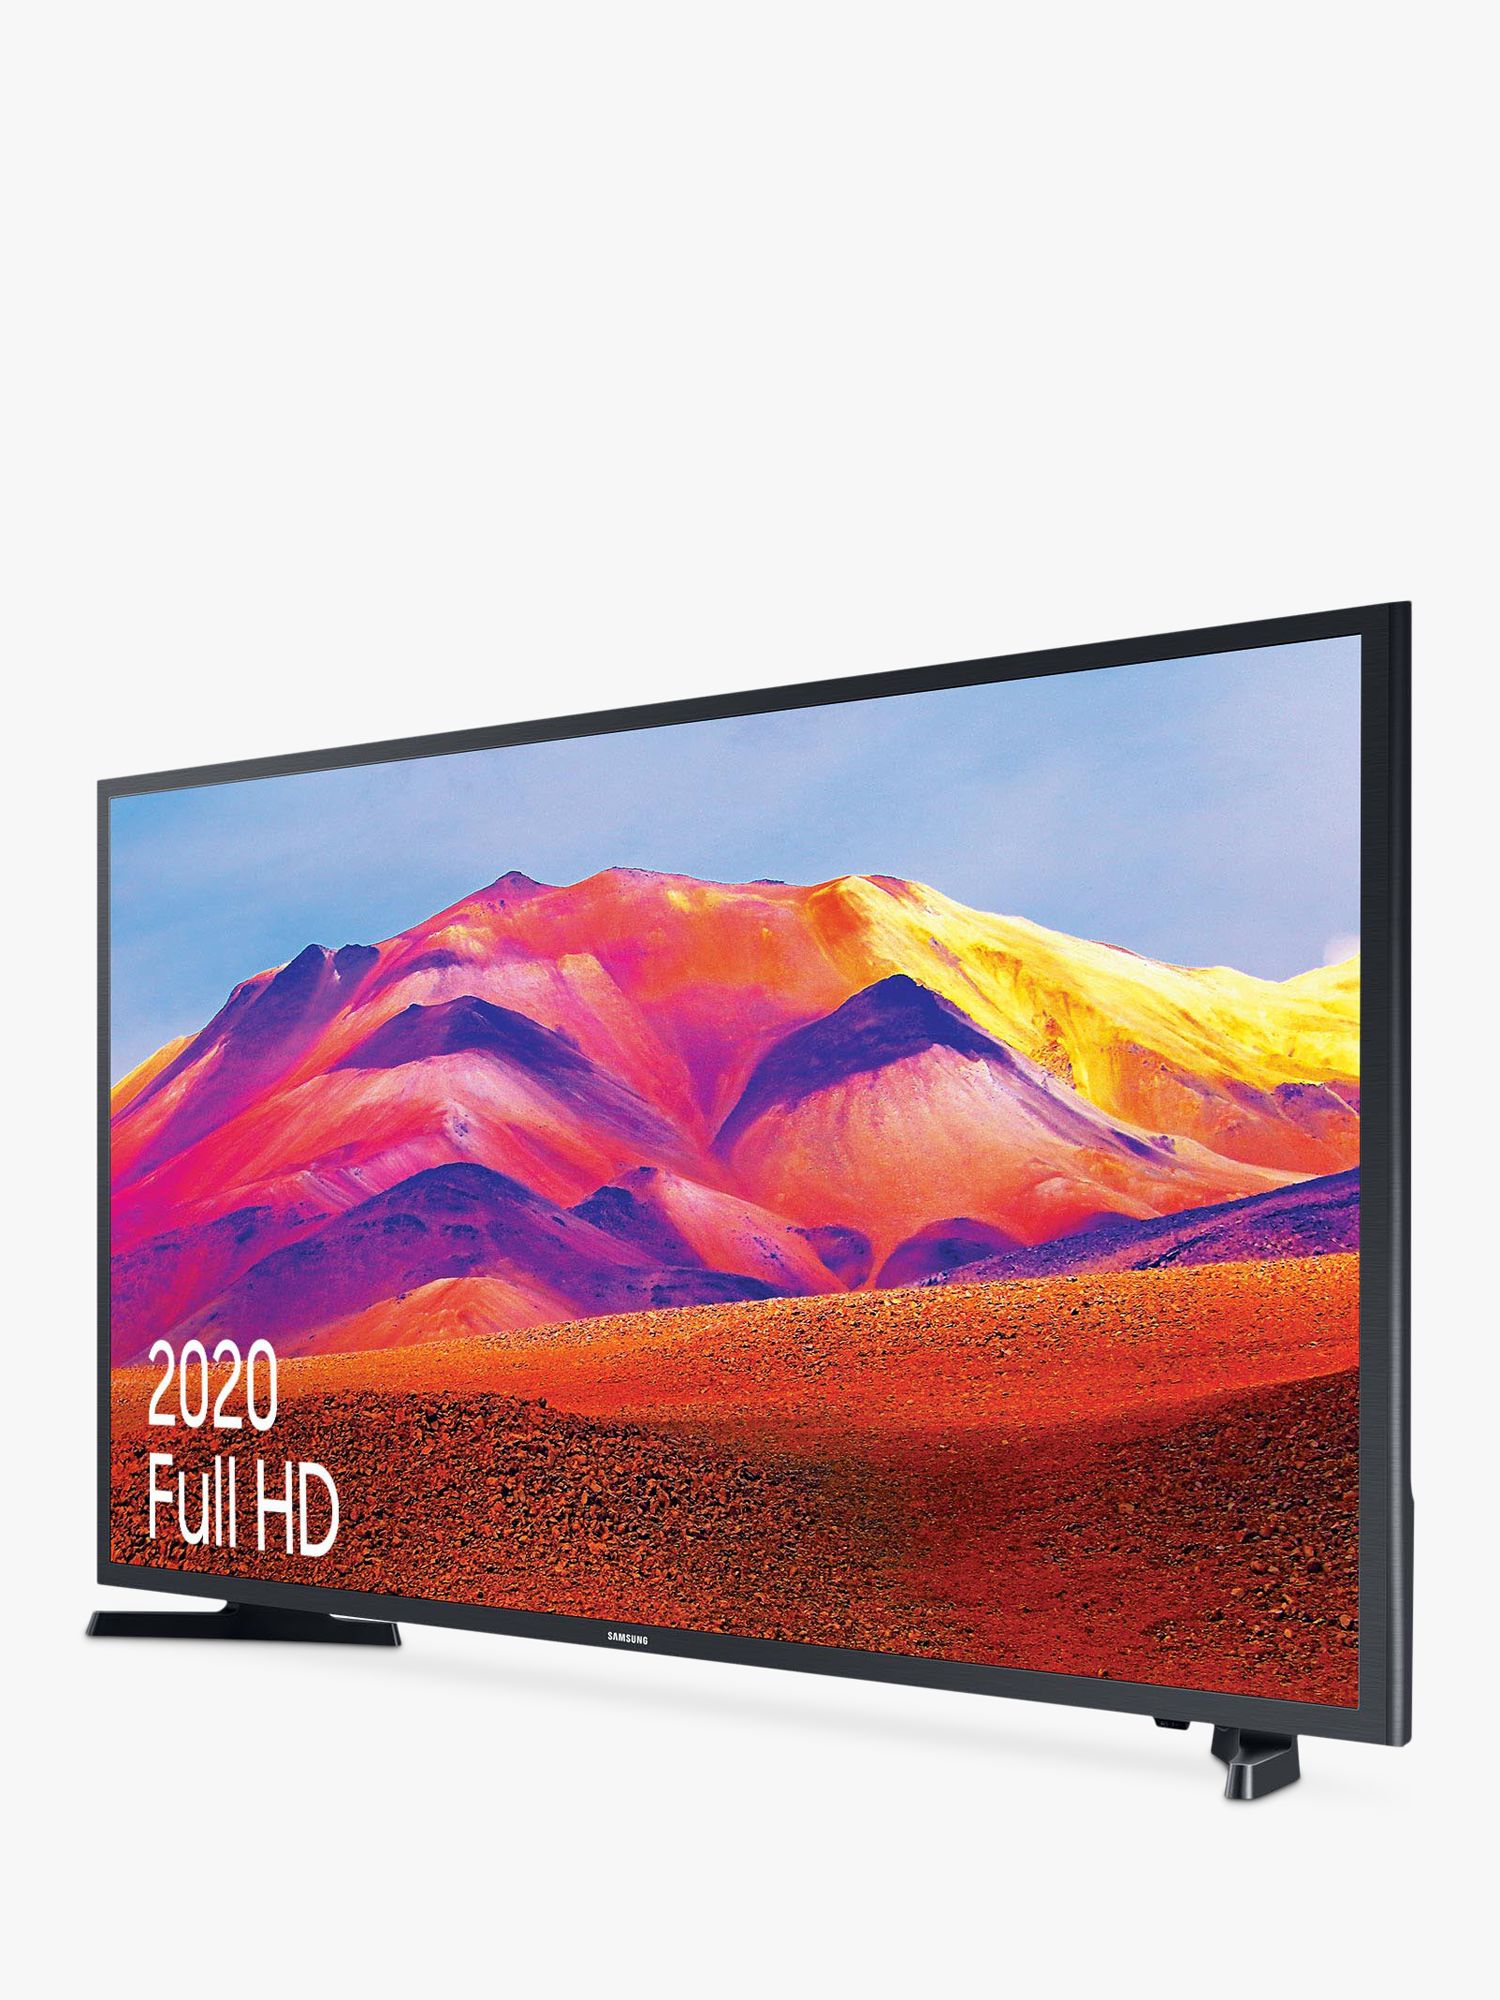 kommando hellige George Eliot Samsung UE32T5300 LED HDR Full HD 1080p Smart TV, 32 inch with TVPlus, Black